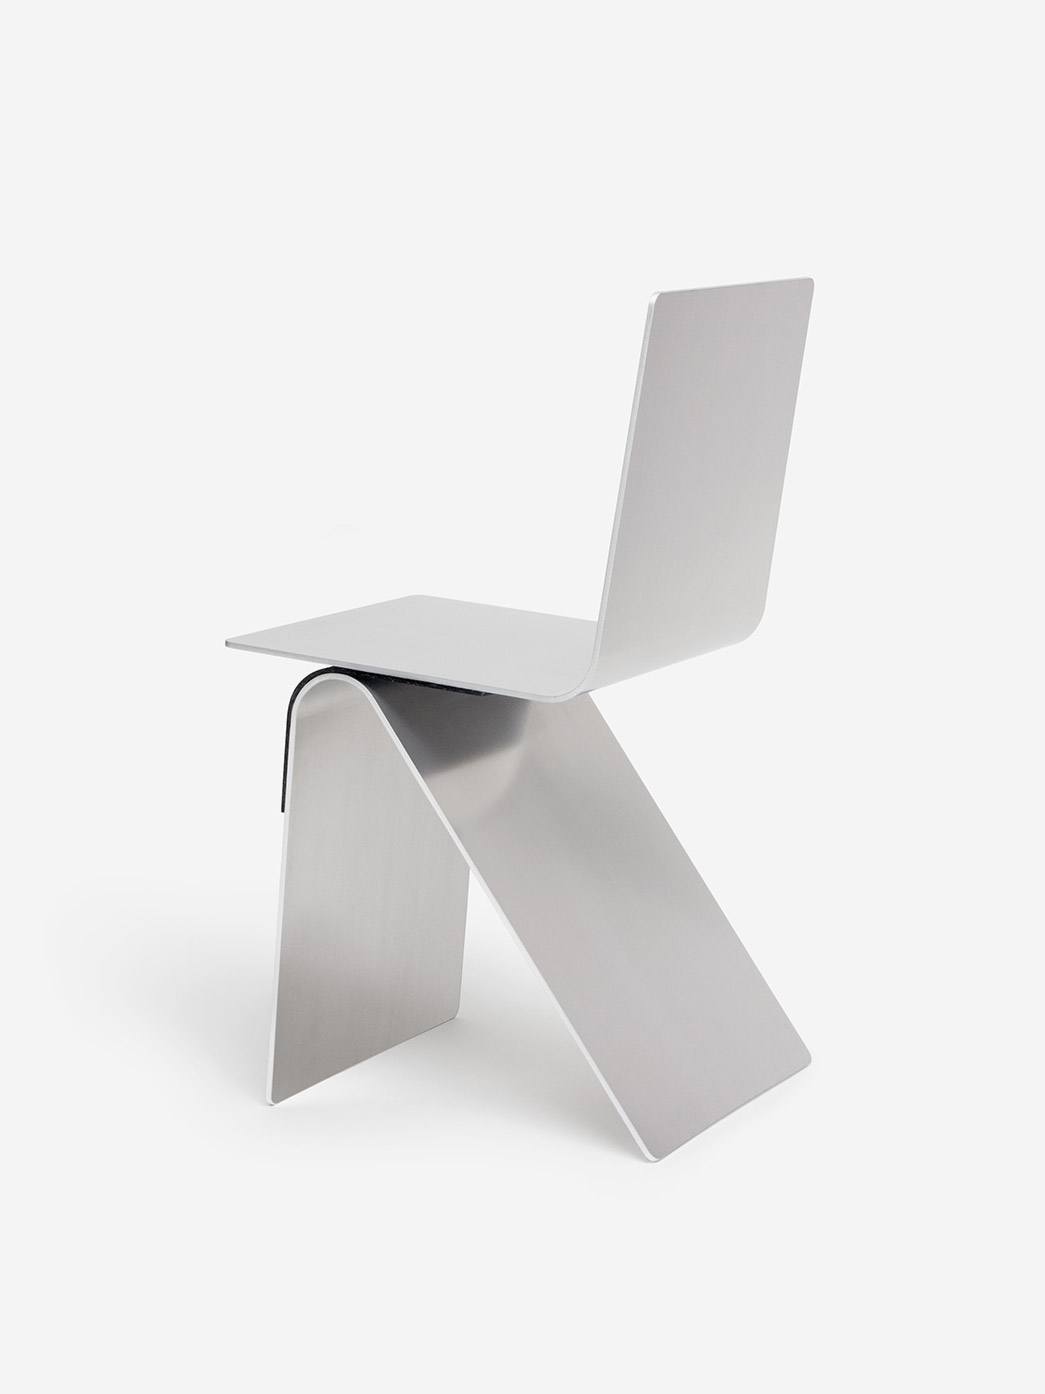 Minimalist Aluminium Chair by Leon Ransmeier | Aesence